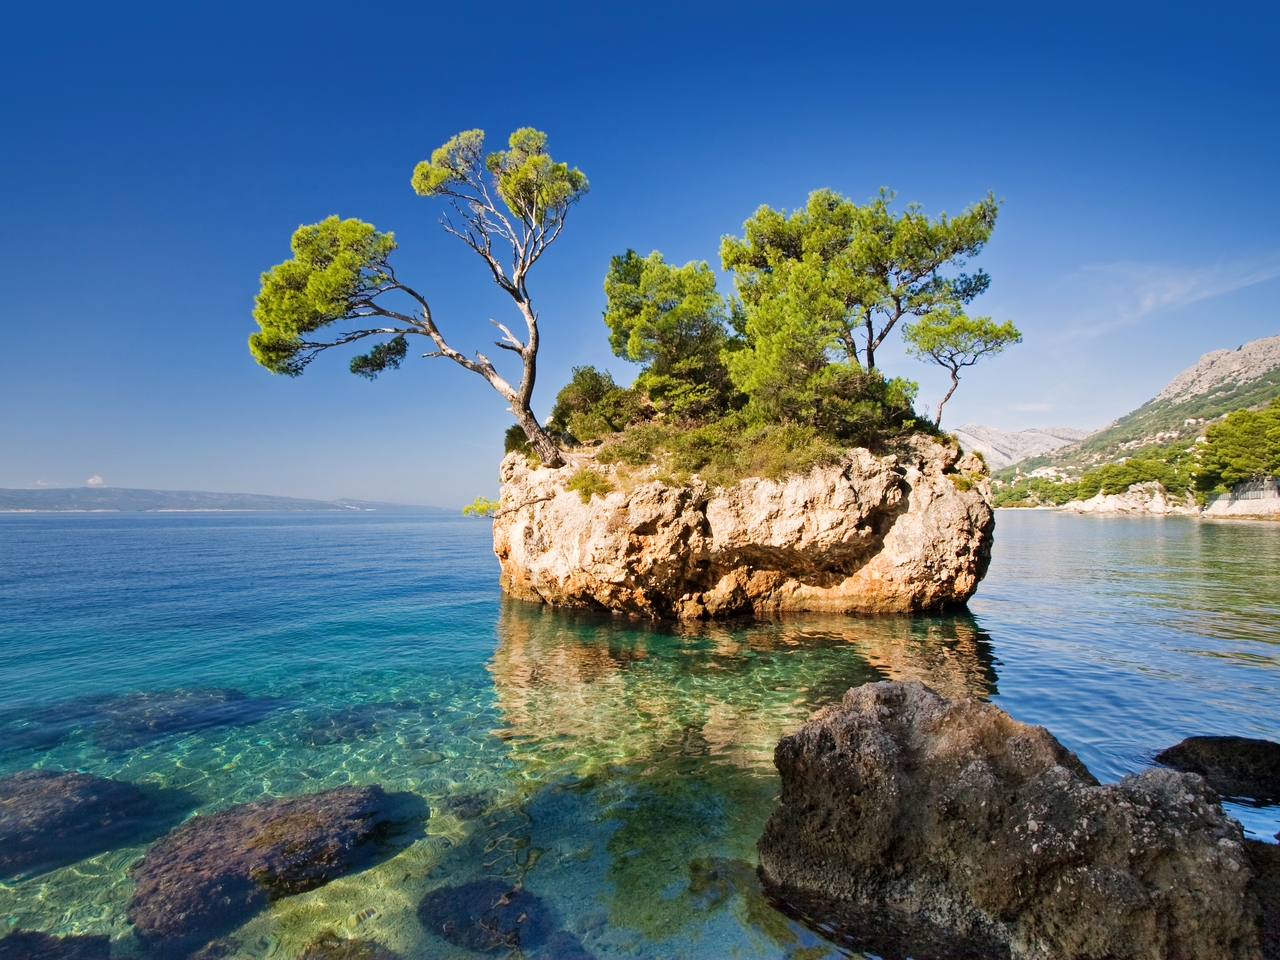 Картинка: Скала, деревья, море, вода, камни, небо